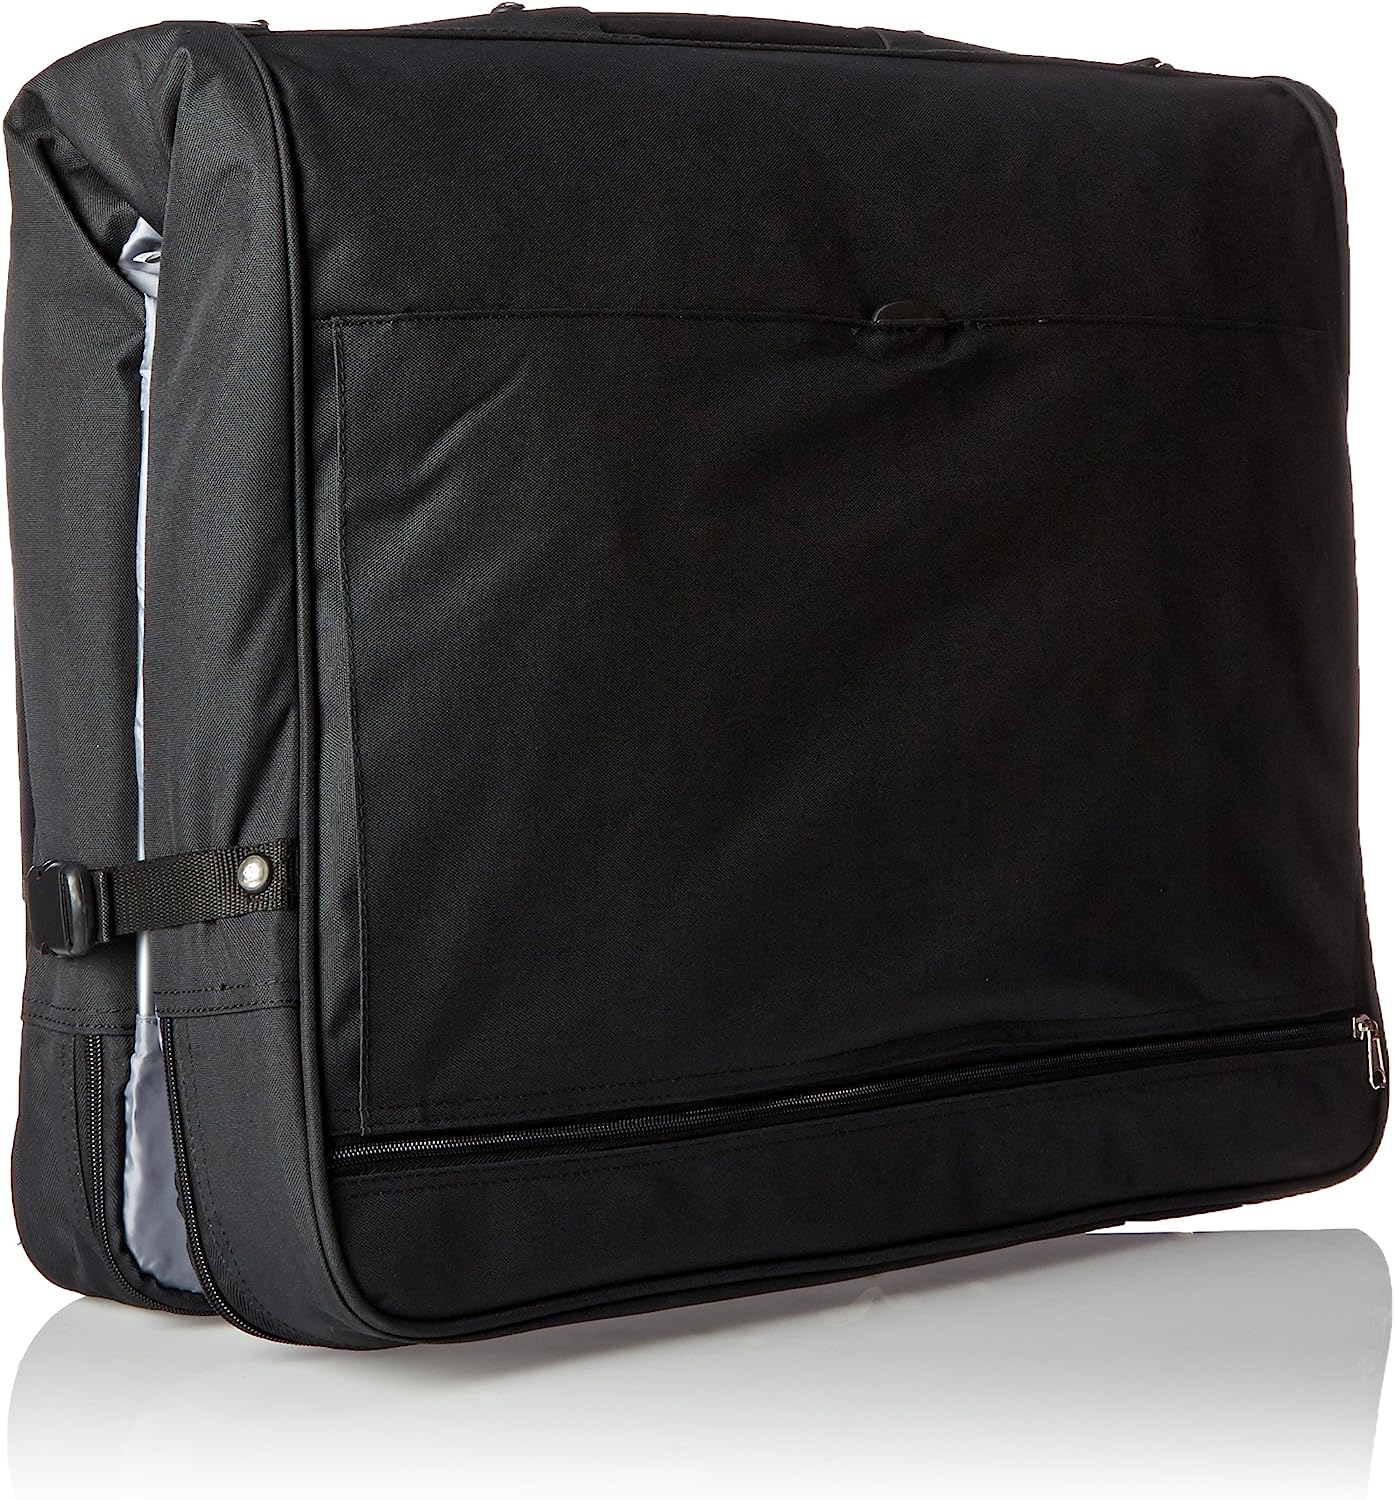 Deluxe Garment Hanging Travel Bag, Black, 45 Inch